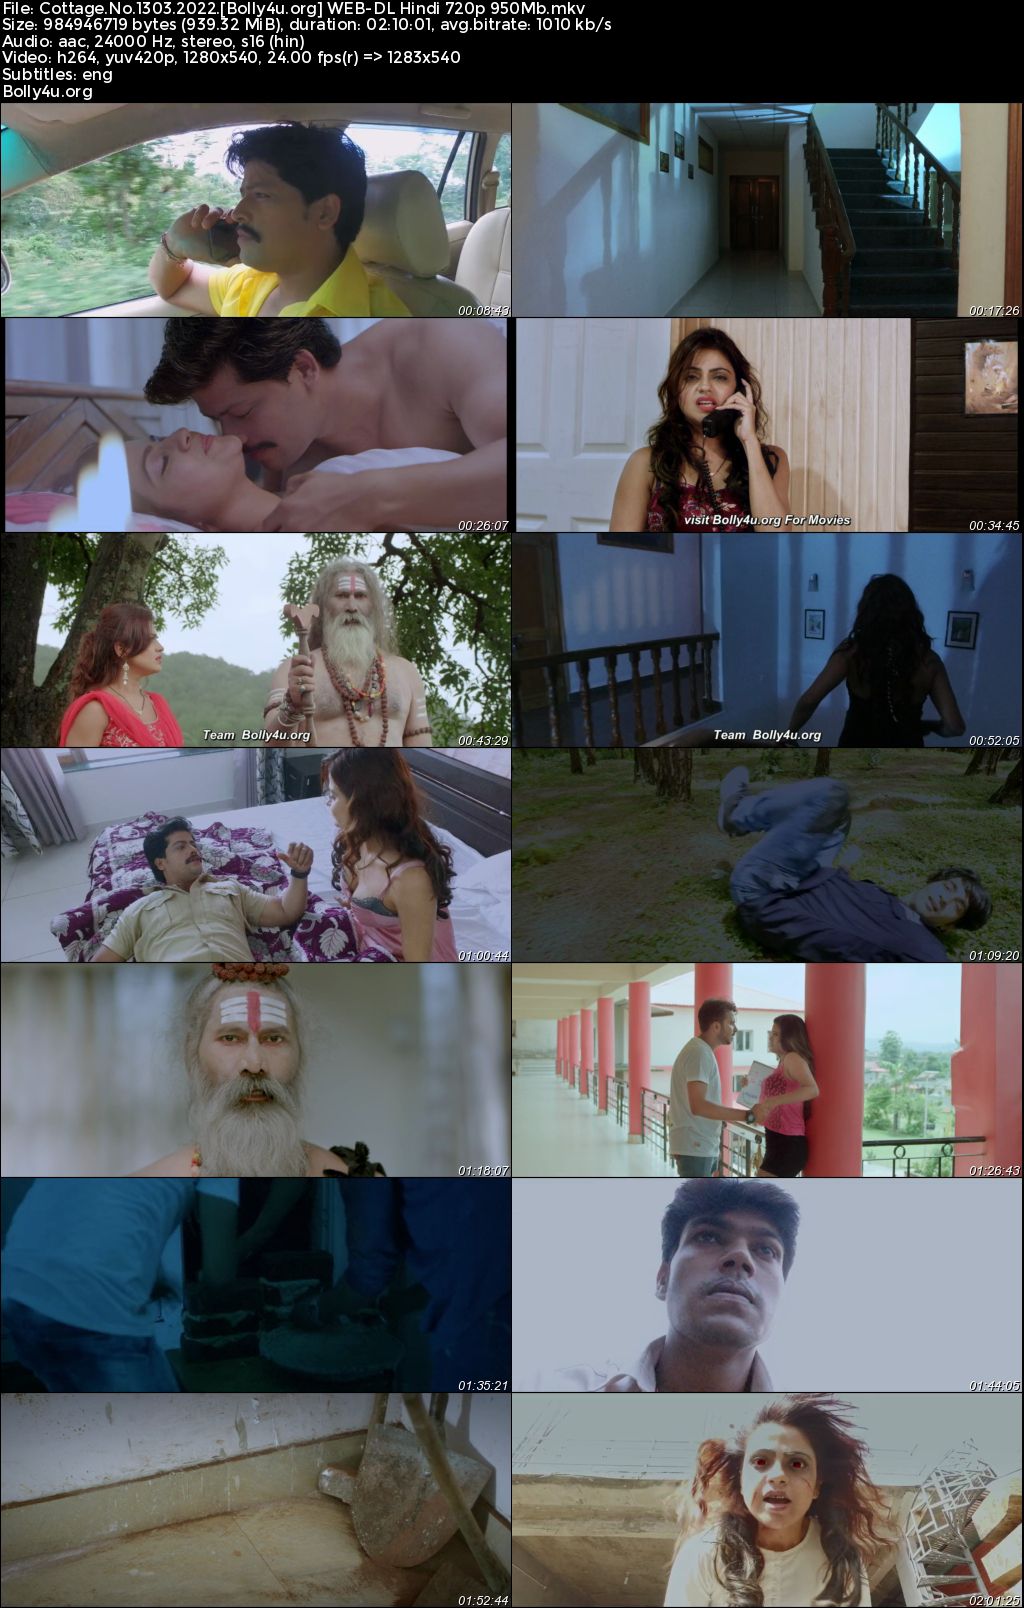 Cottage No 1303 2022 WEB-DL Hindi Full Movie Download 1080p 720p 480p